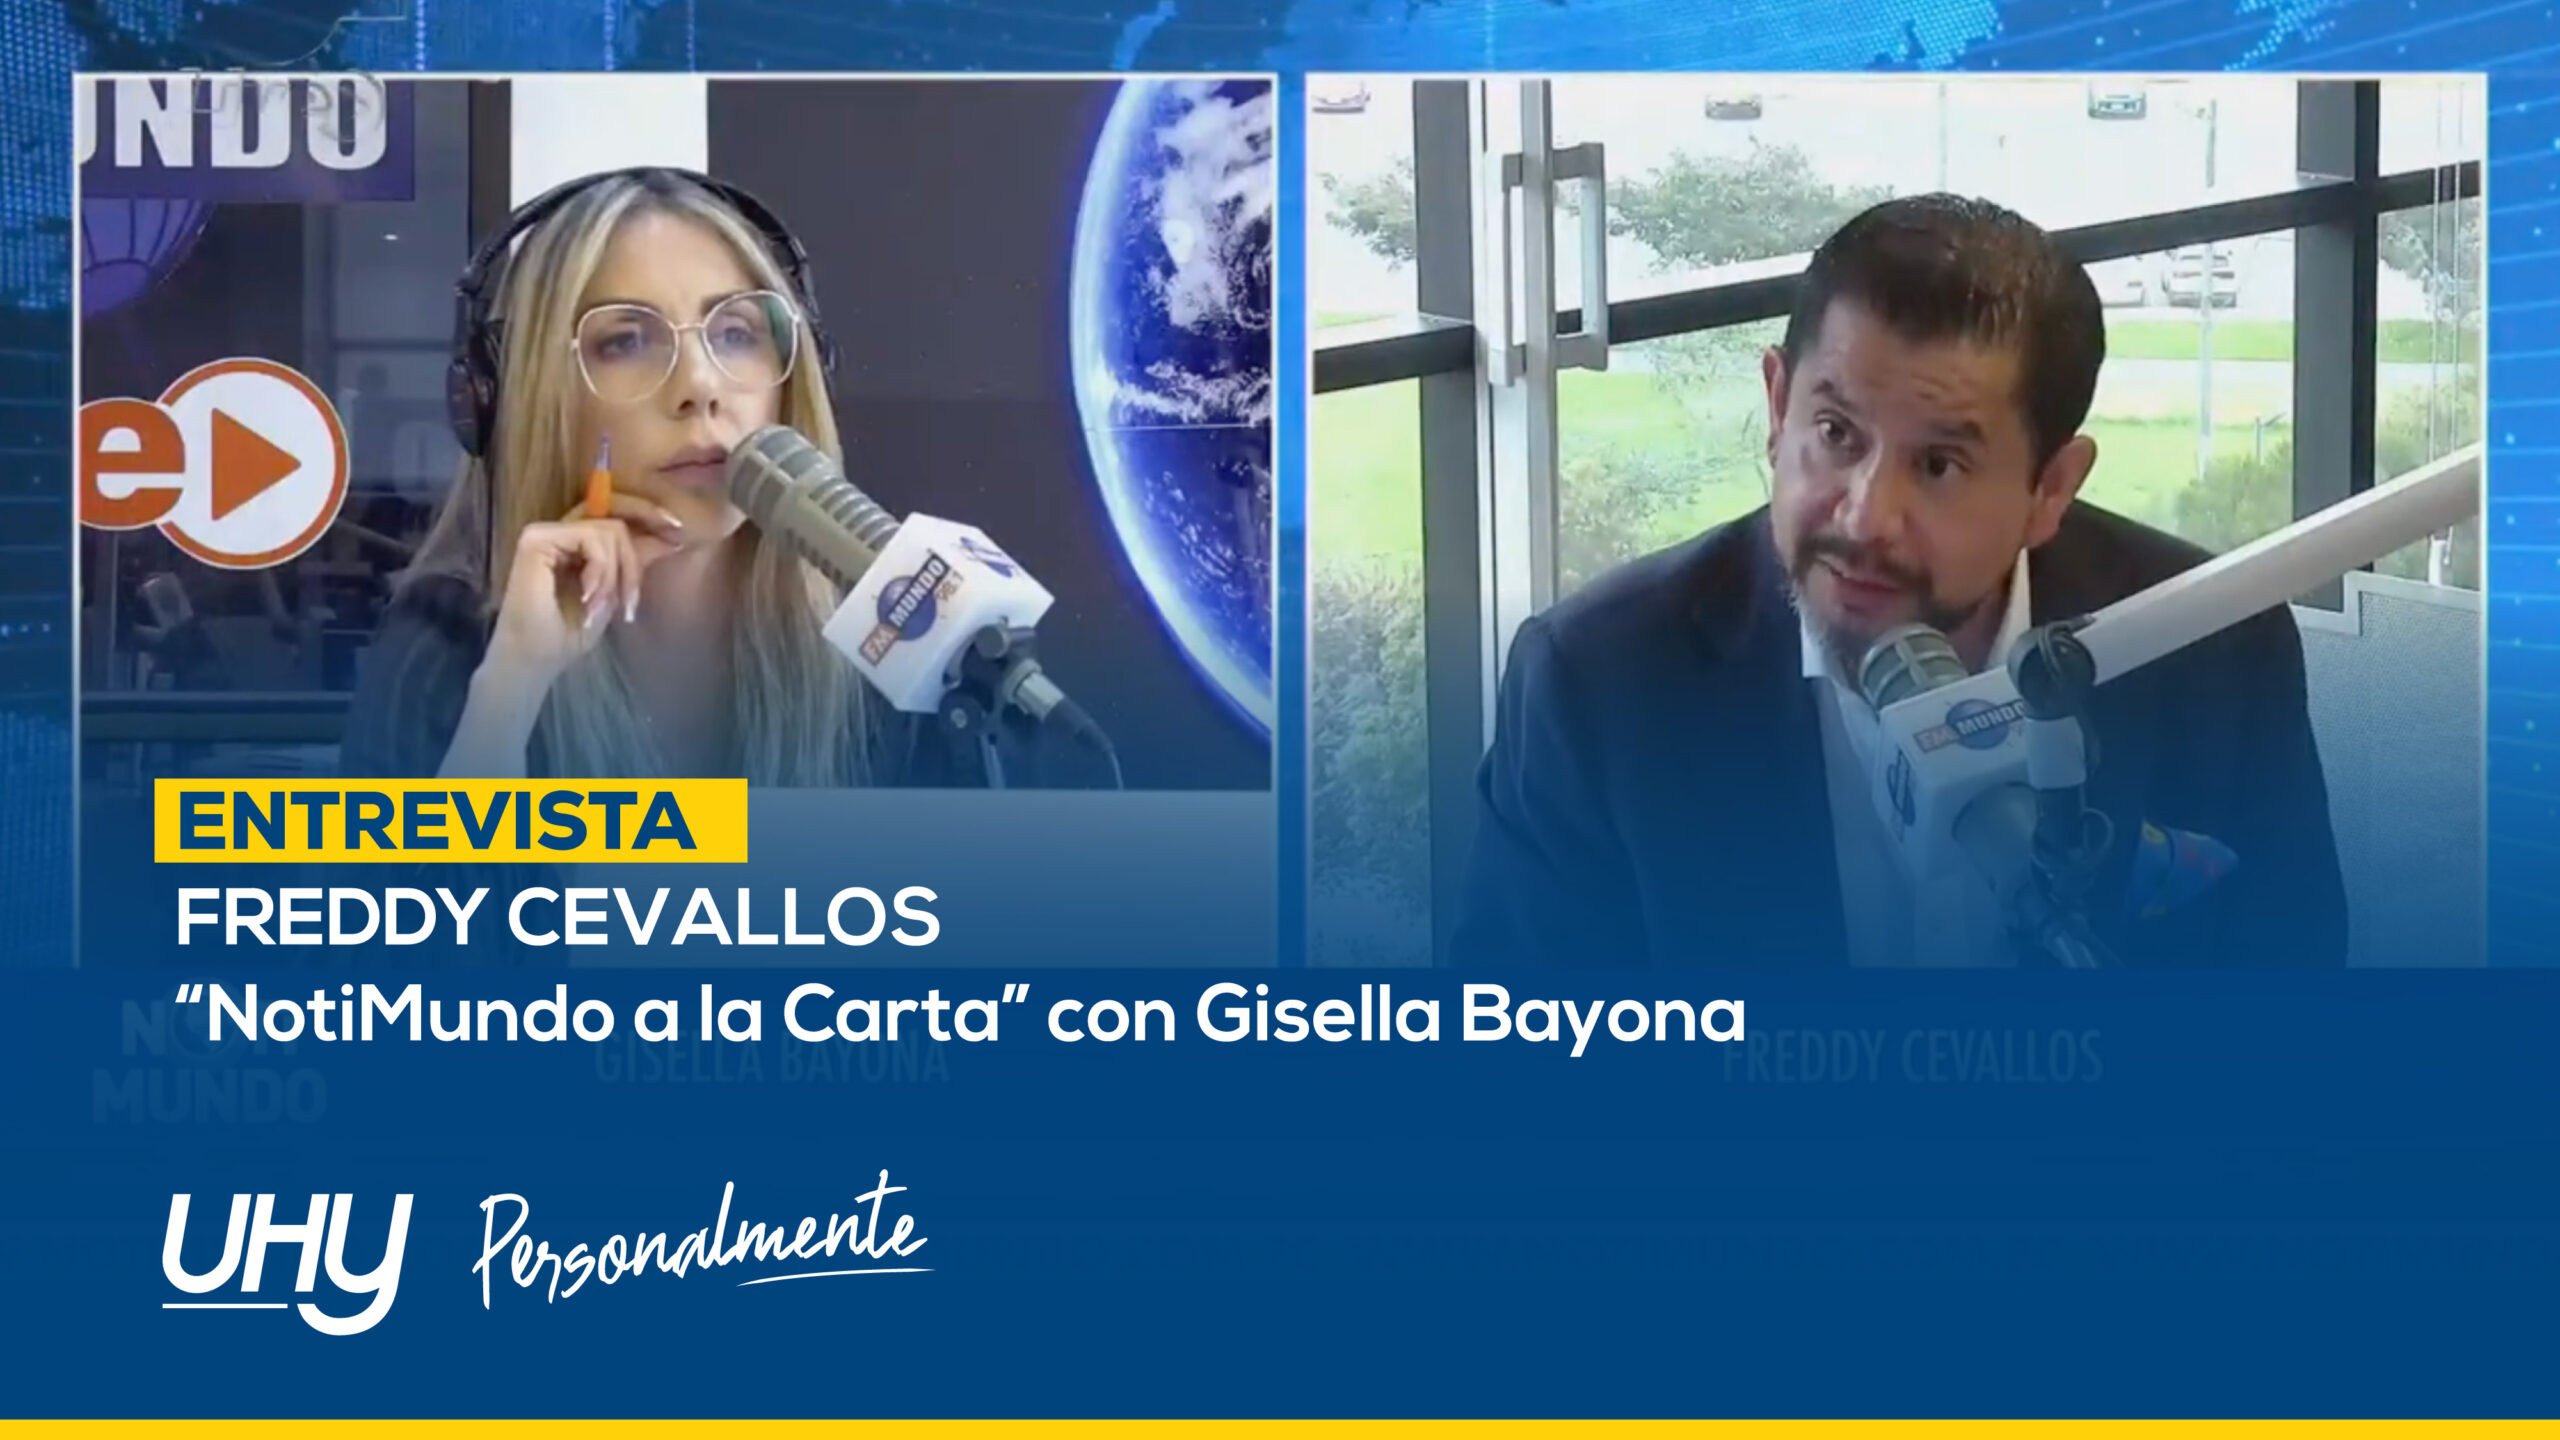 Entrevista Freddy Cevallos con Gisella Bayona